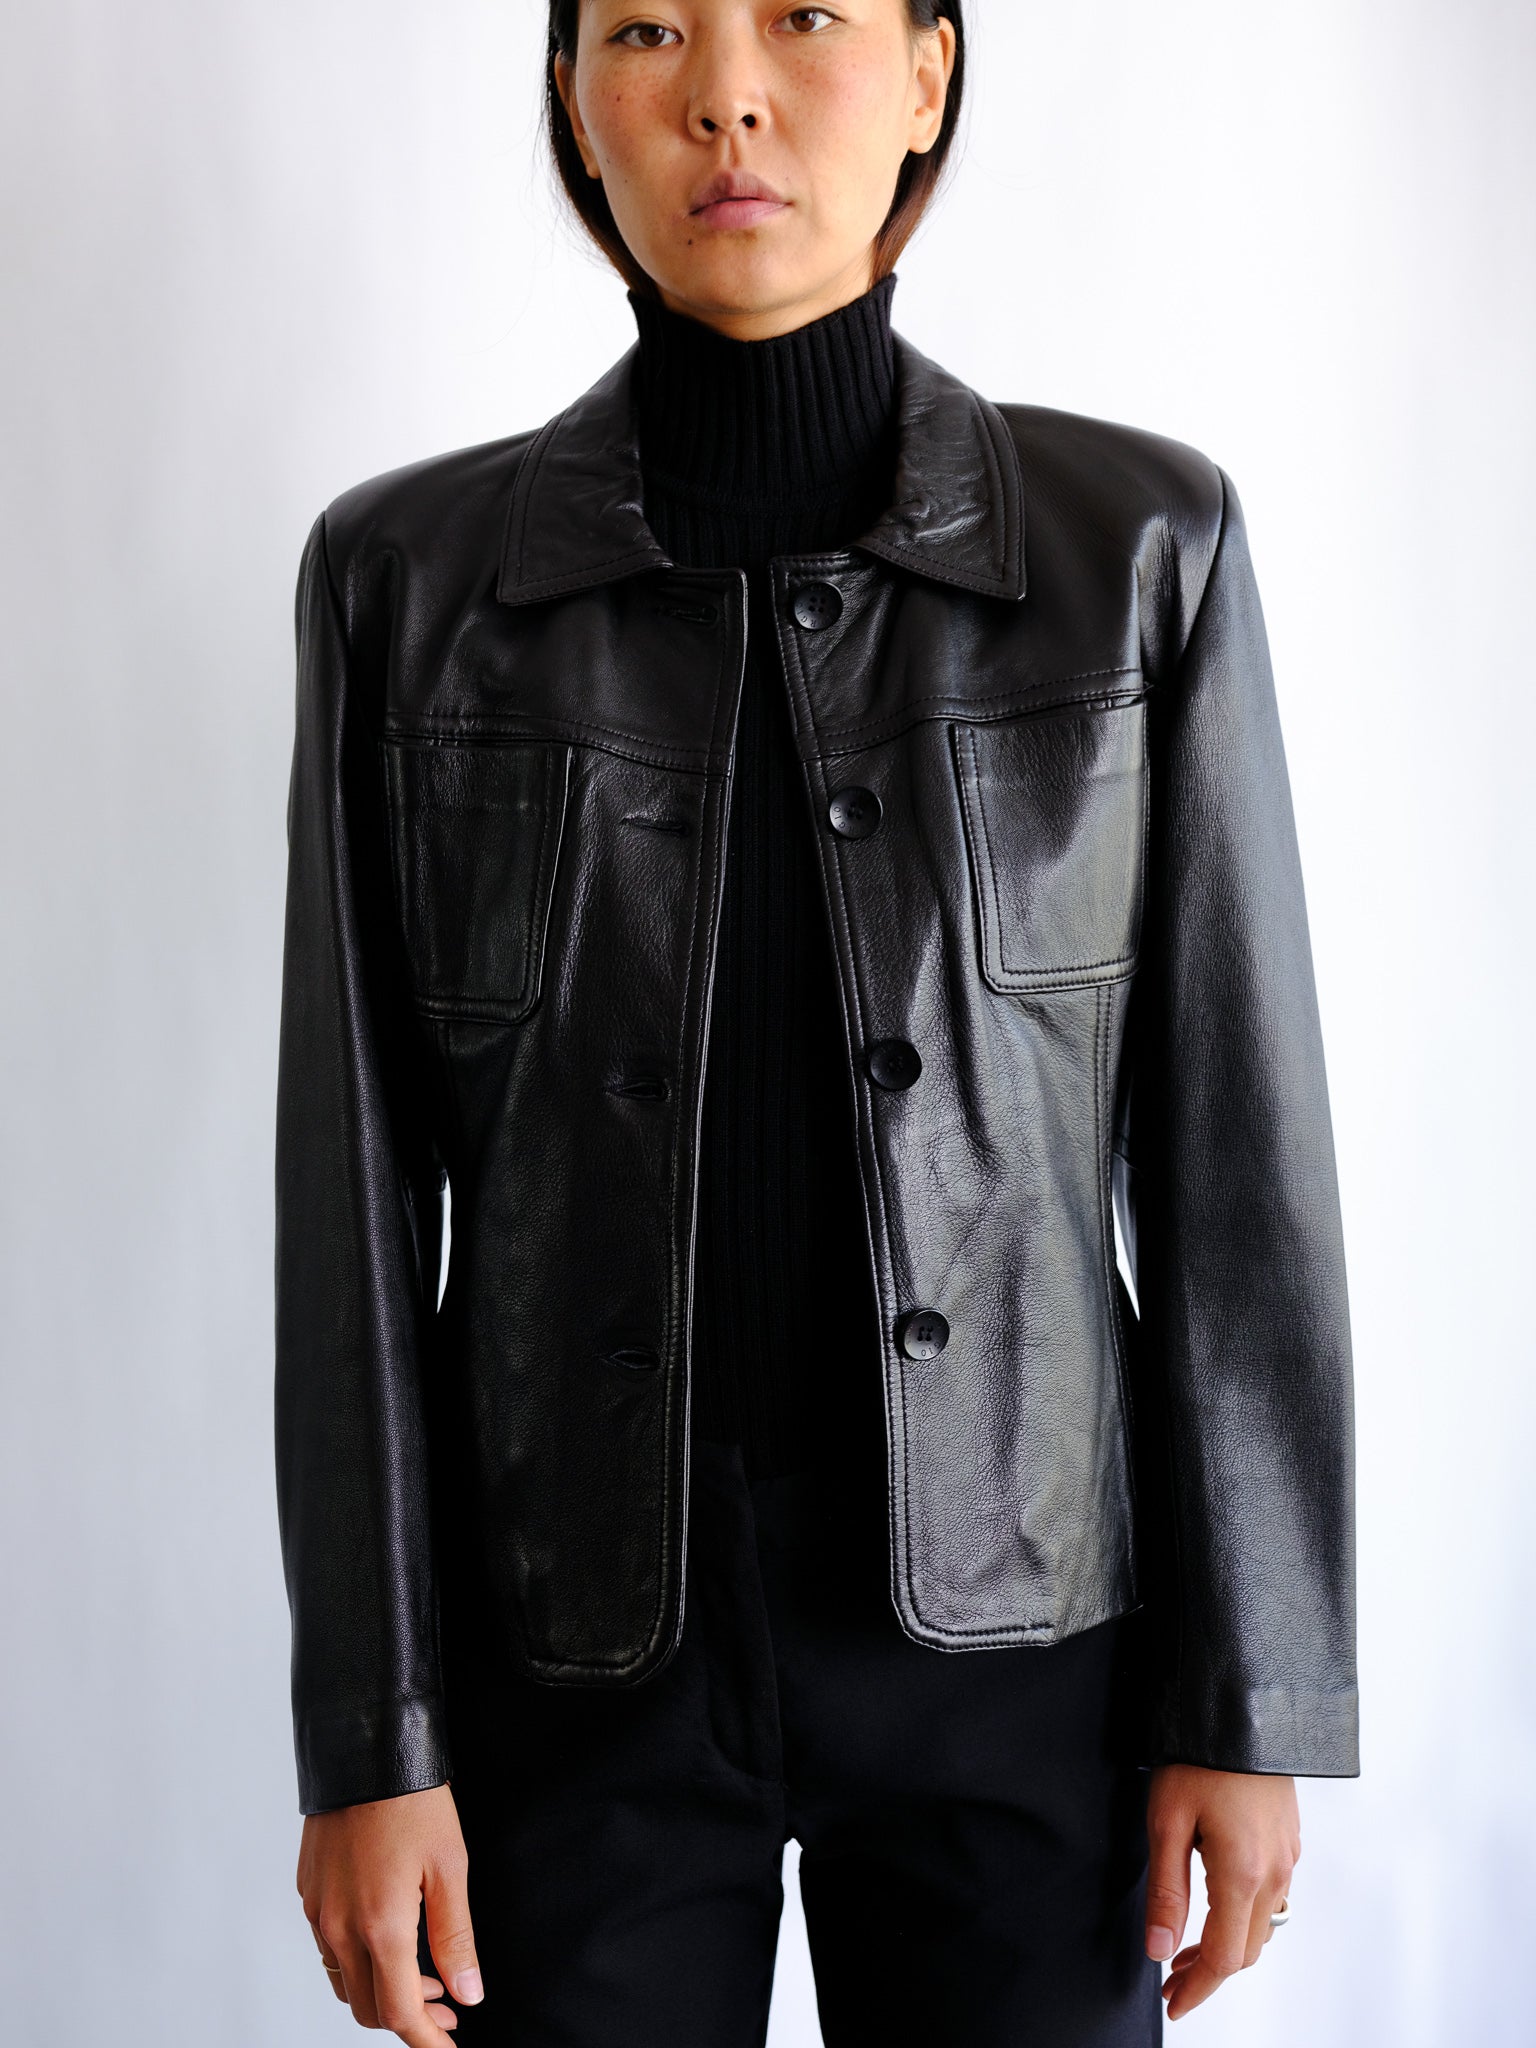 Giorgio leather jacket